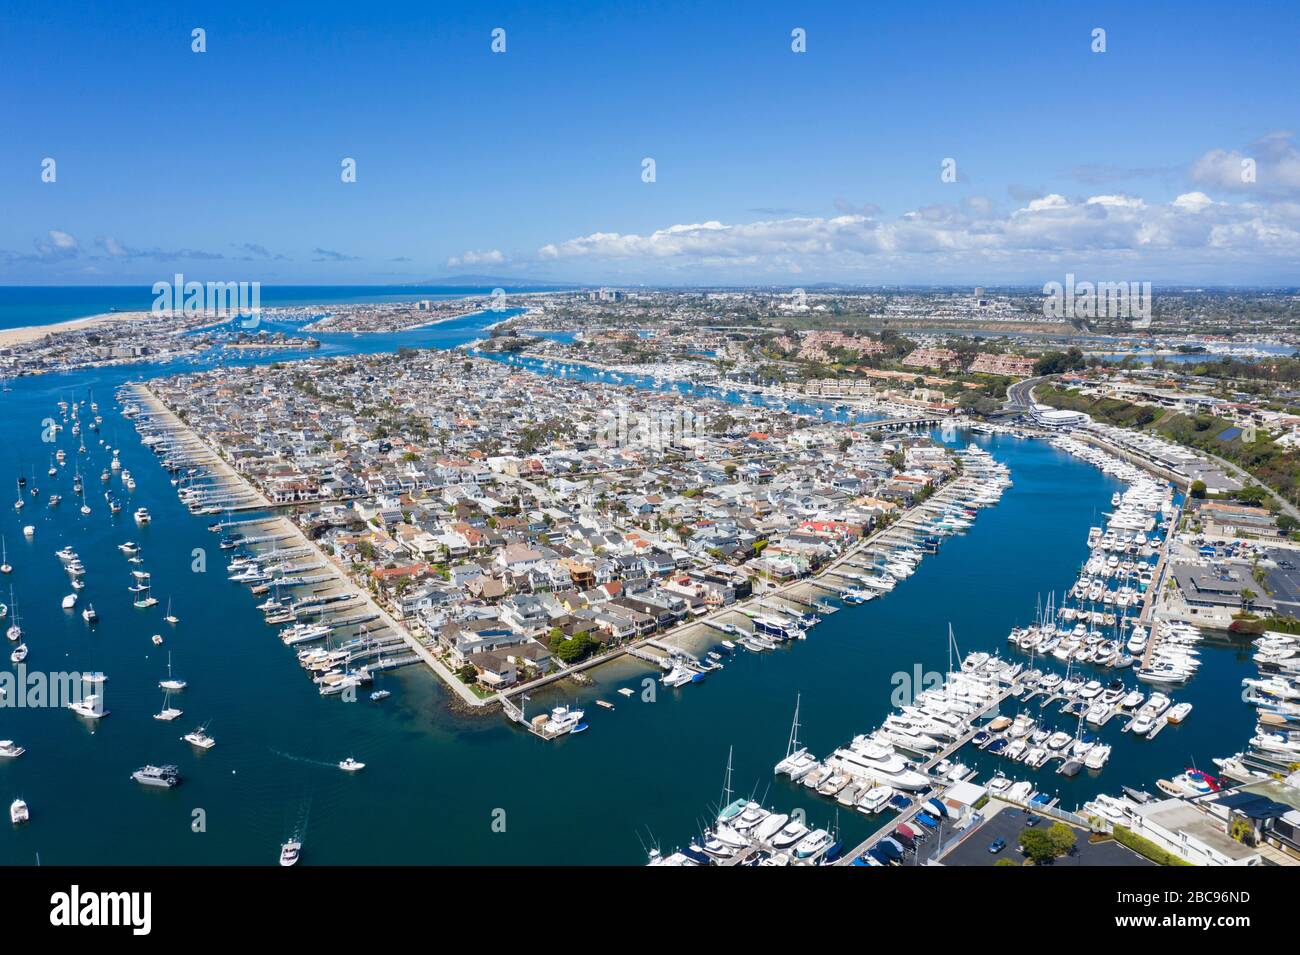 Balboa Island, Newport Beach - Wikipedia